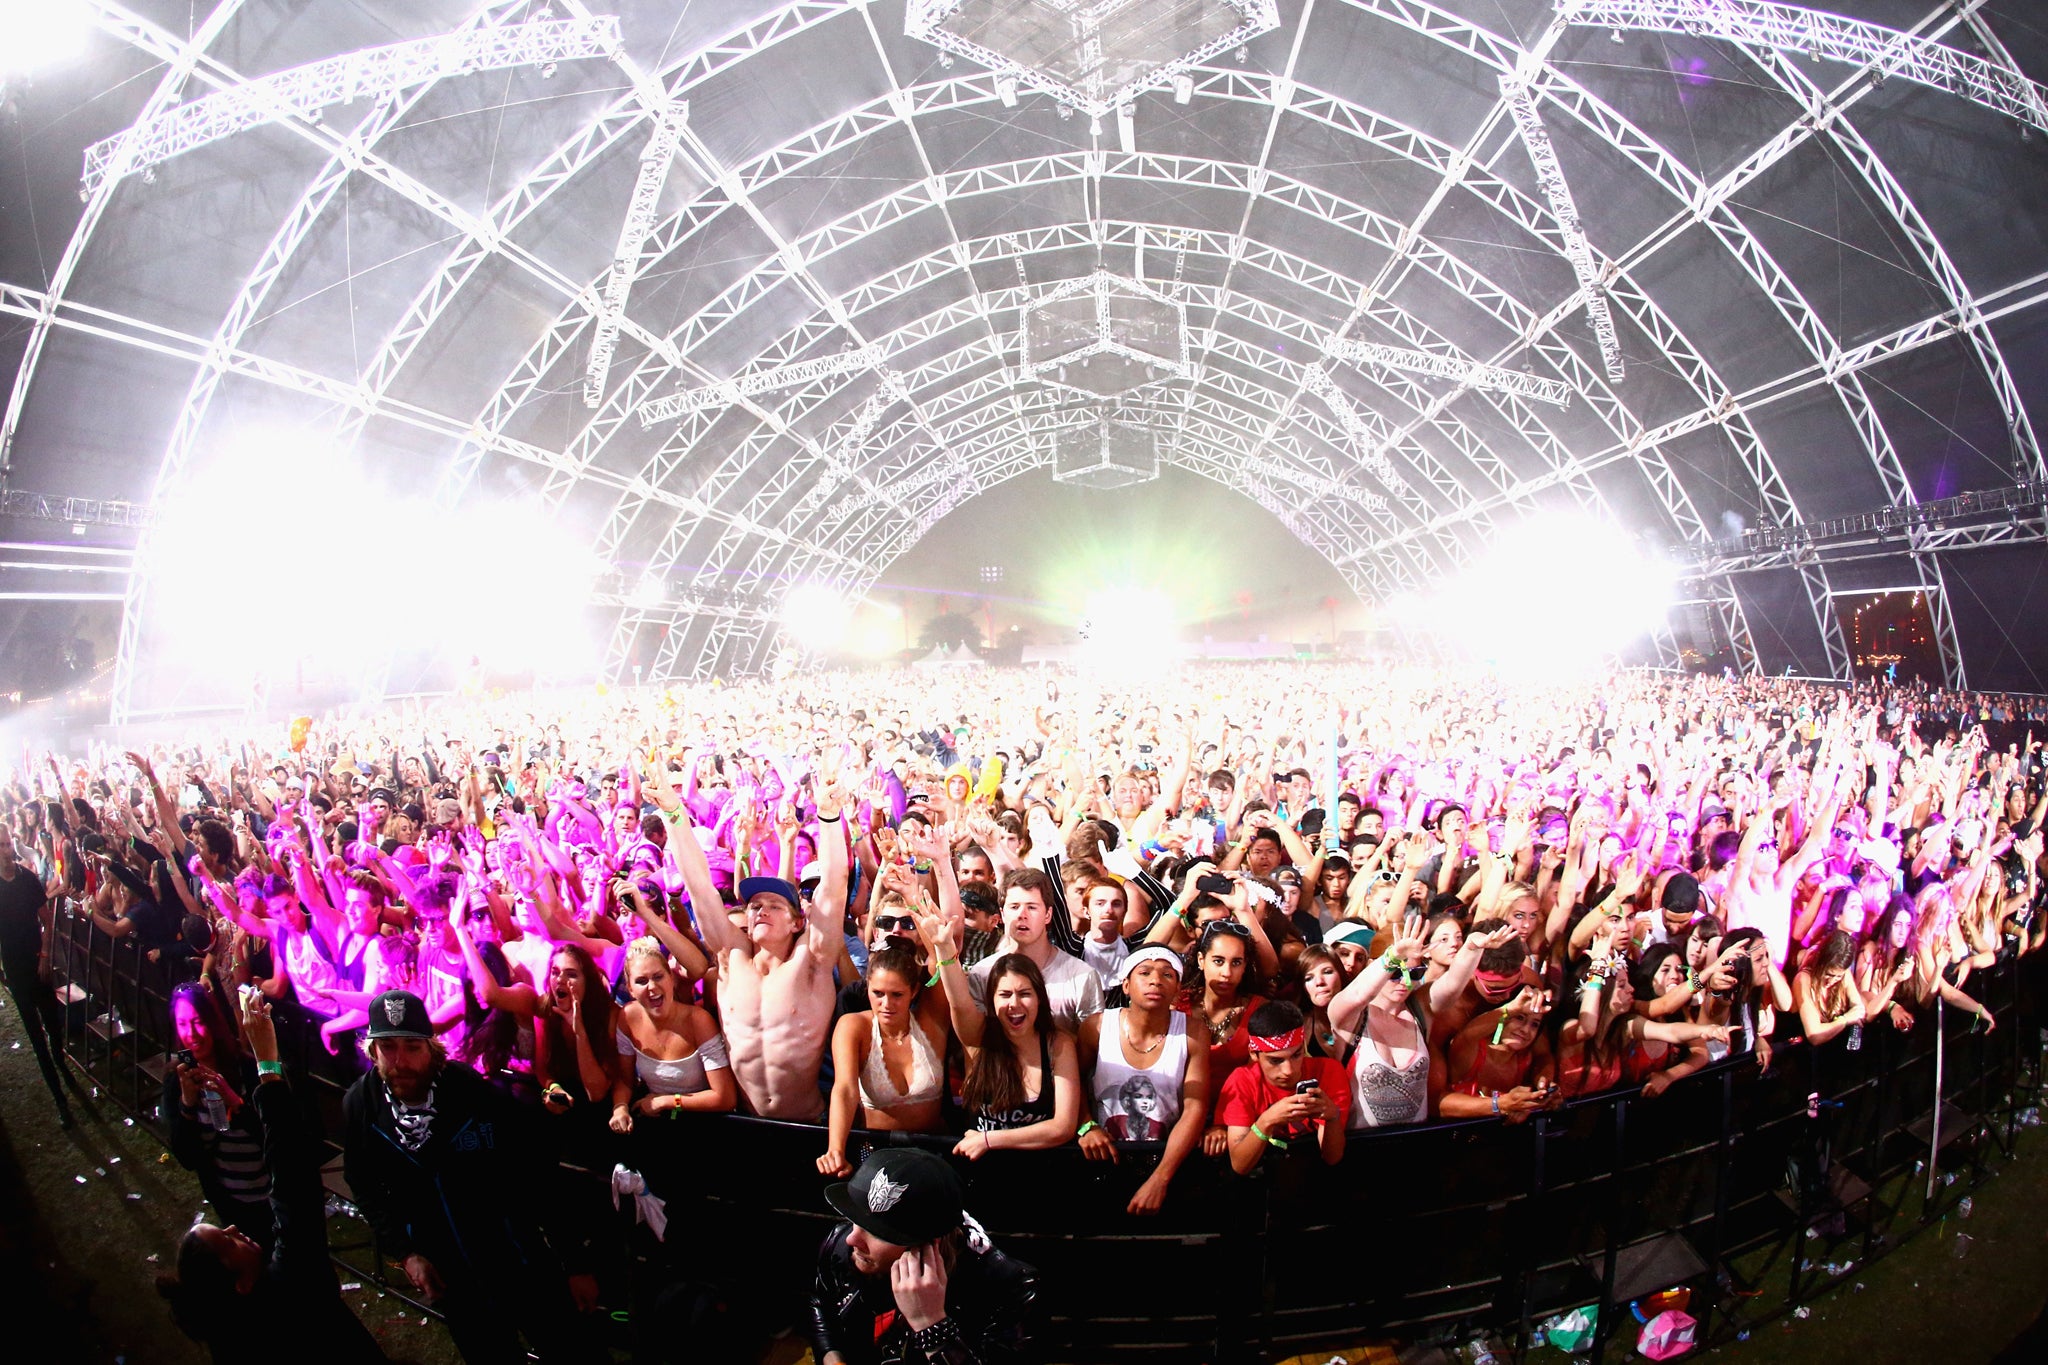 Coachella's 2013 crowd soak up the atmosphere